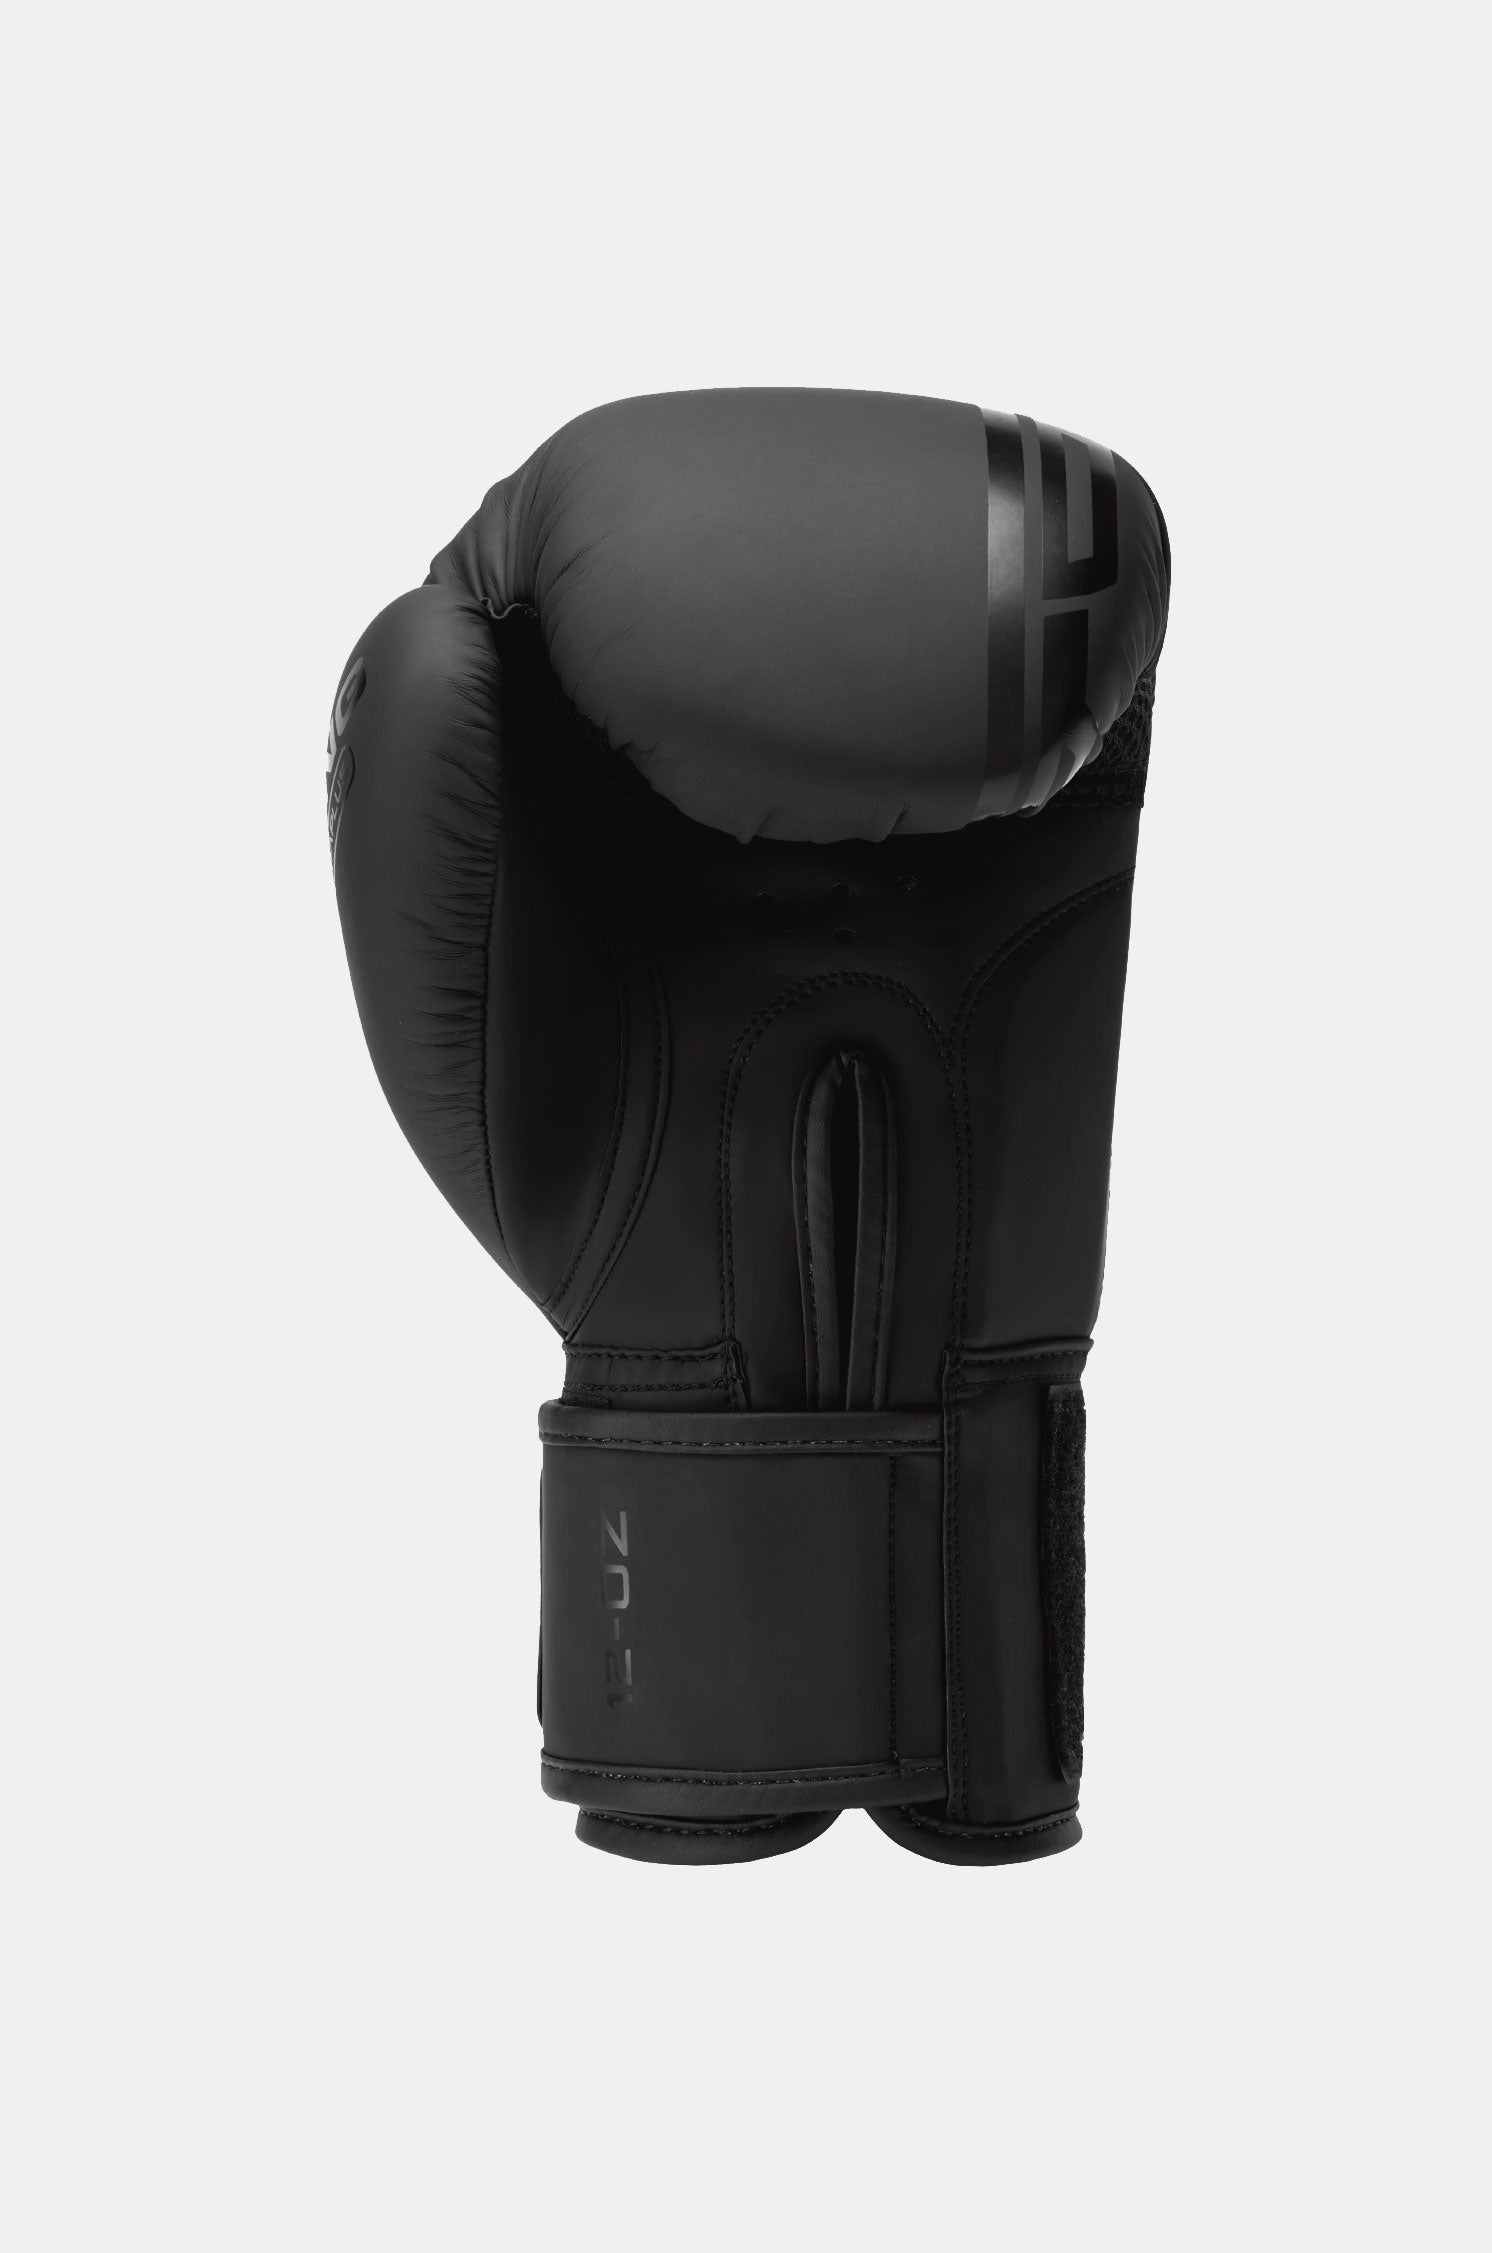 STING Armaplus Boxing Glove Matte Black